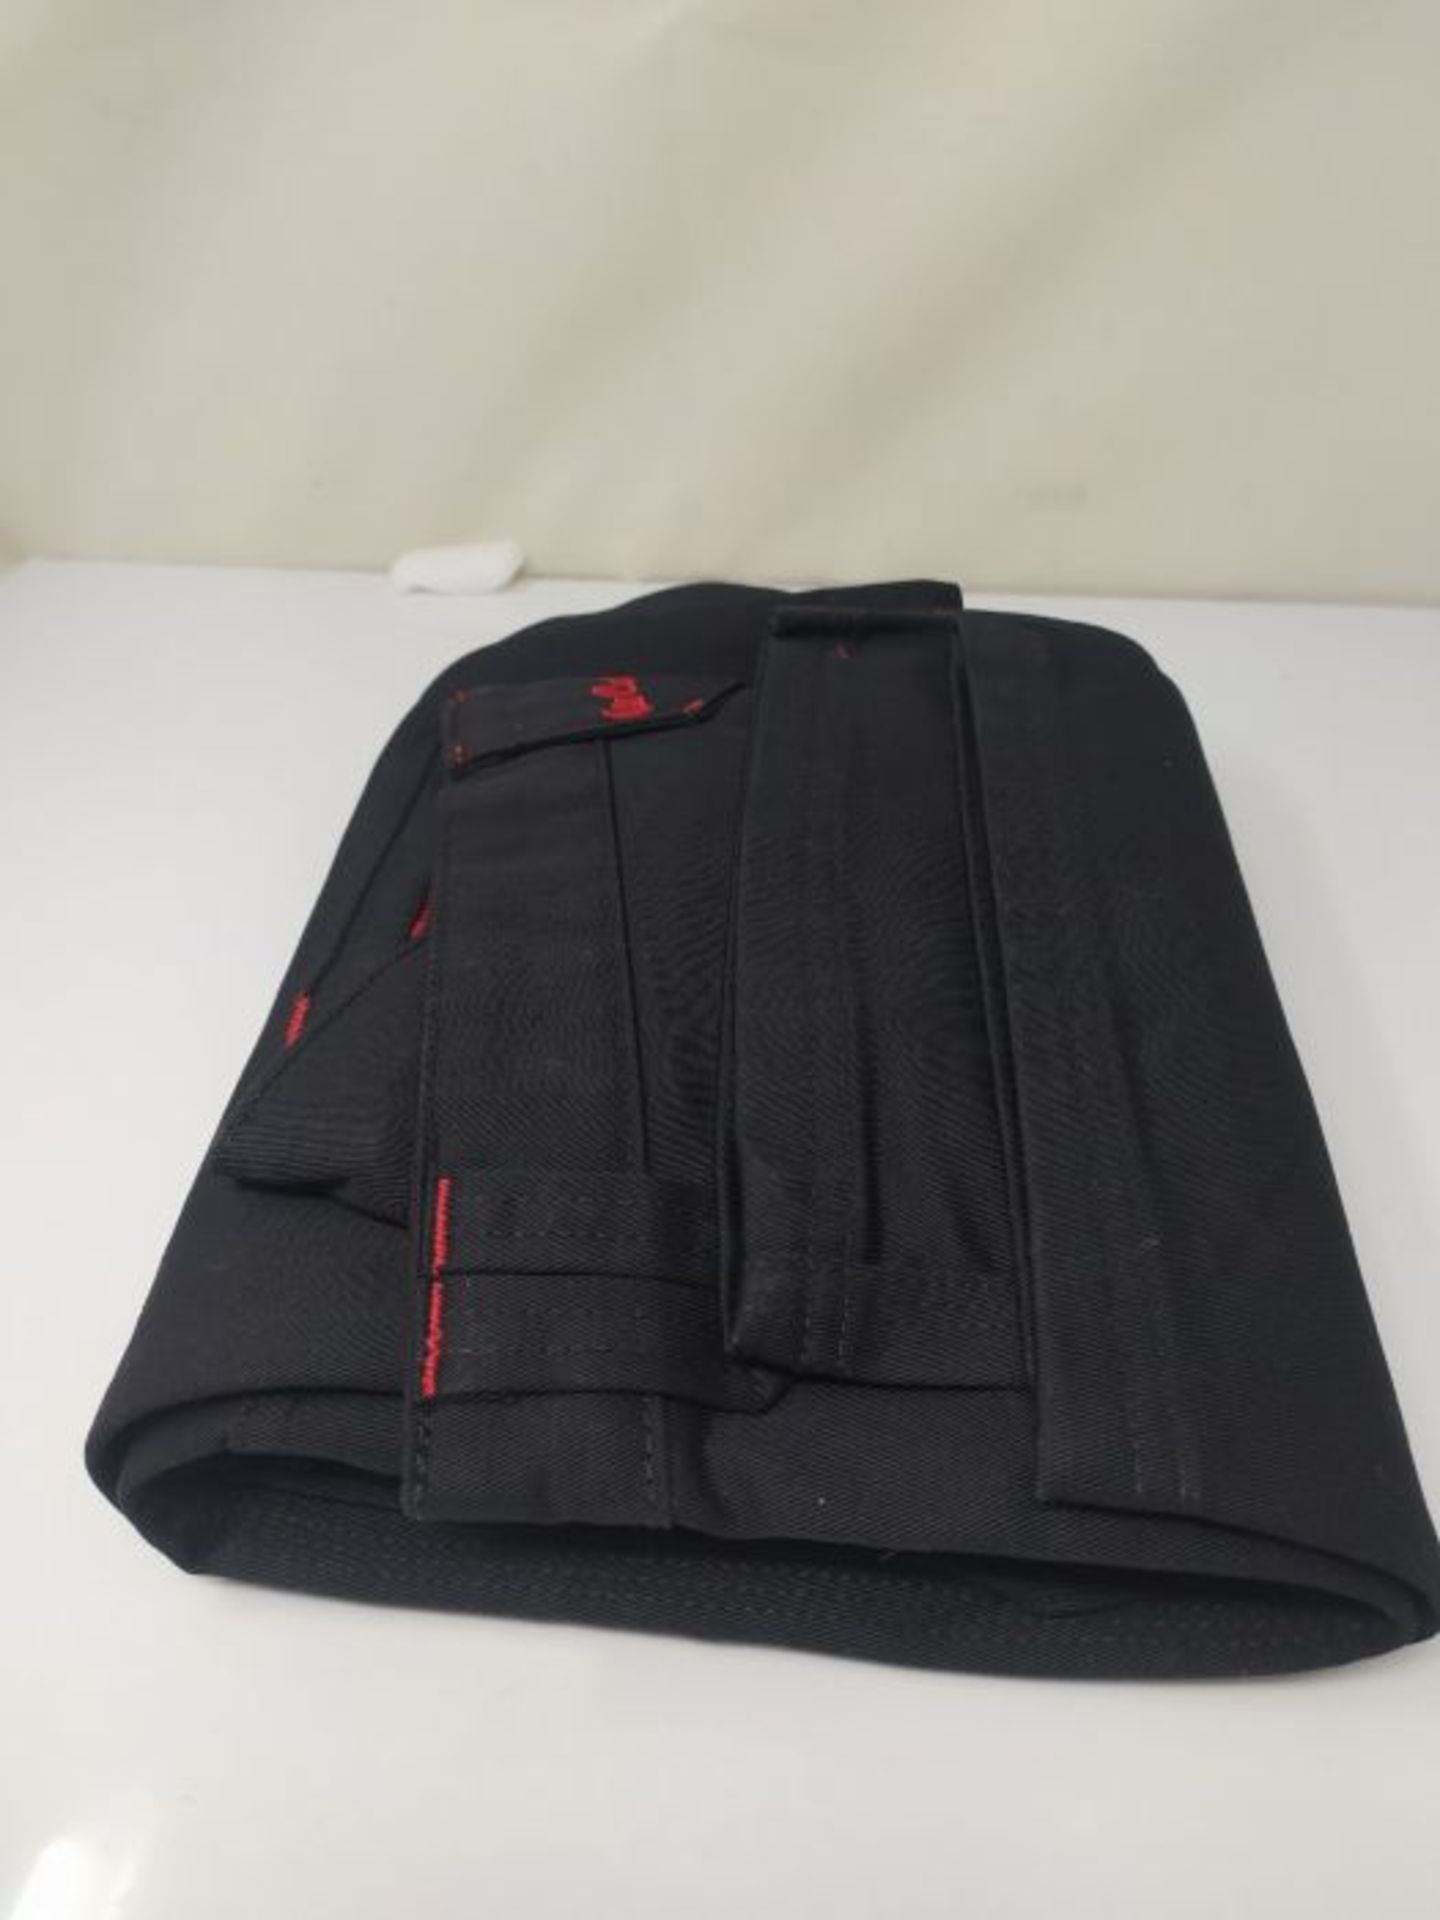 Lee Cooper Mens Cargo Workwear Pant Multi Tool Knee Pad Pocket Trouser Black 32W/31L - Image 2 of 2